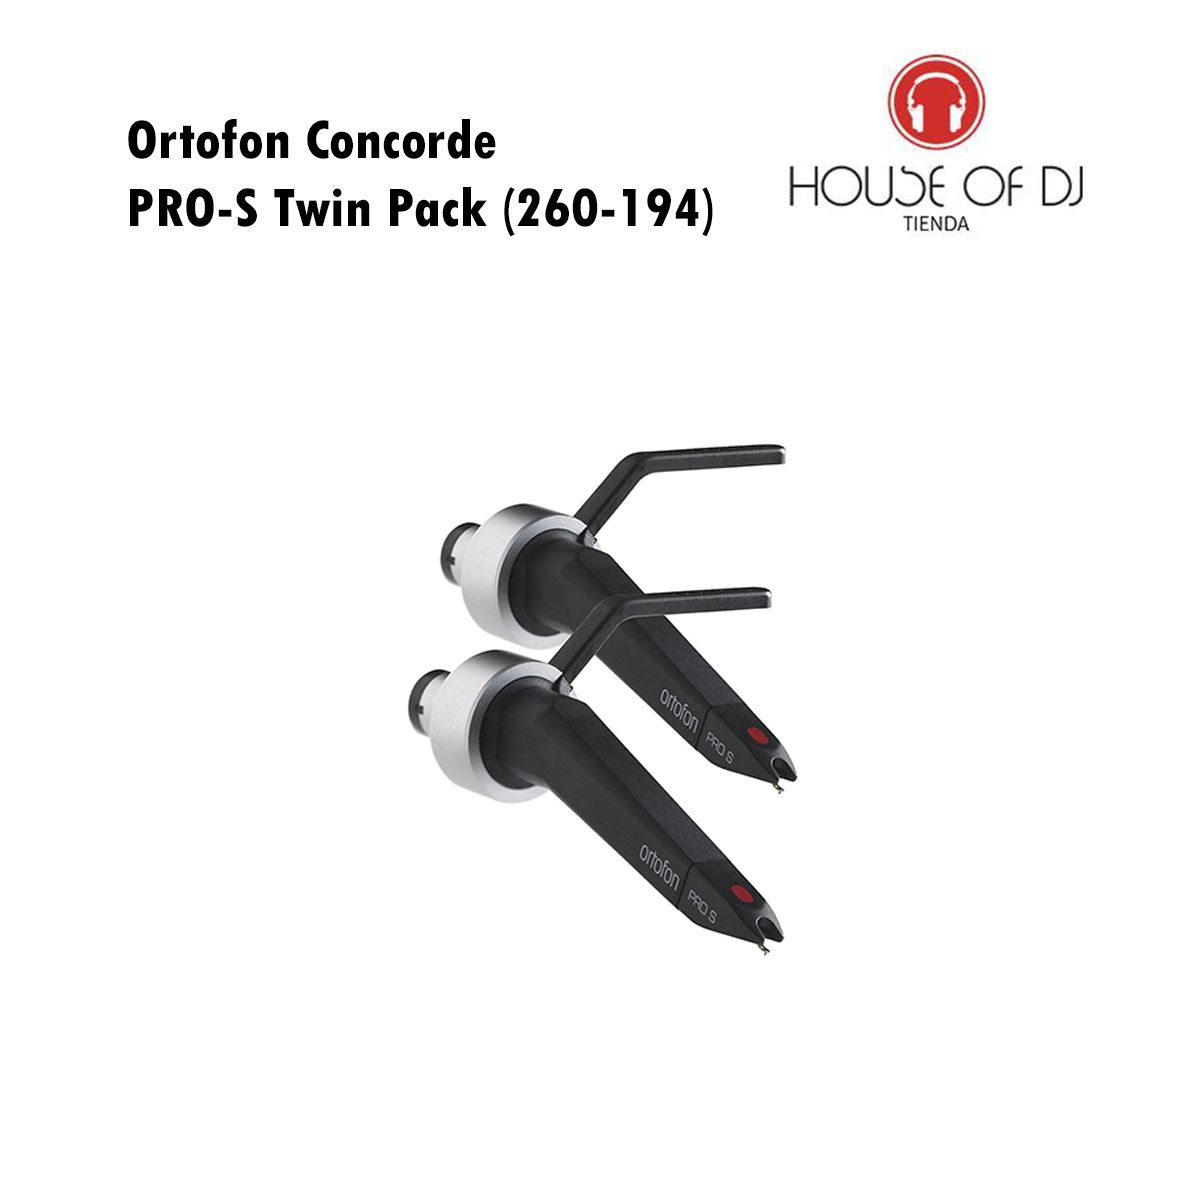 Ortofon Concorde Pro-S Twin Pack - House of DJ